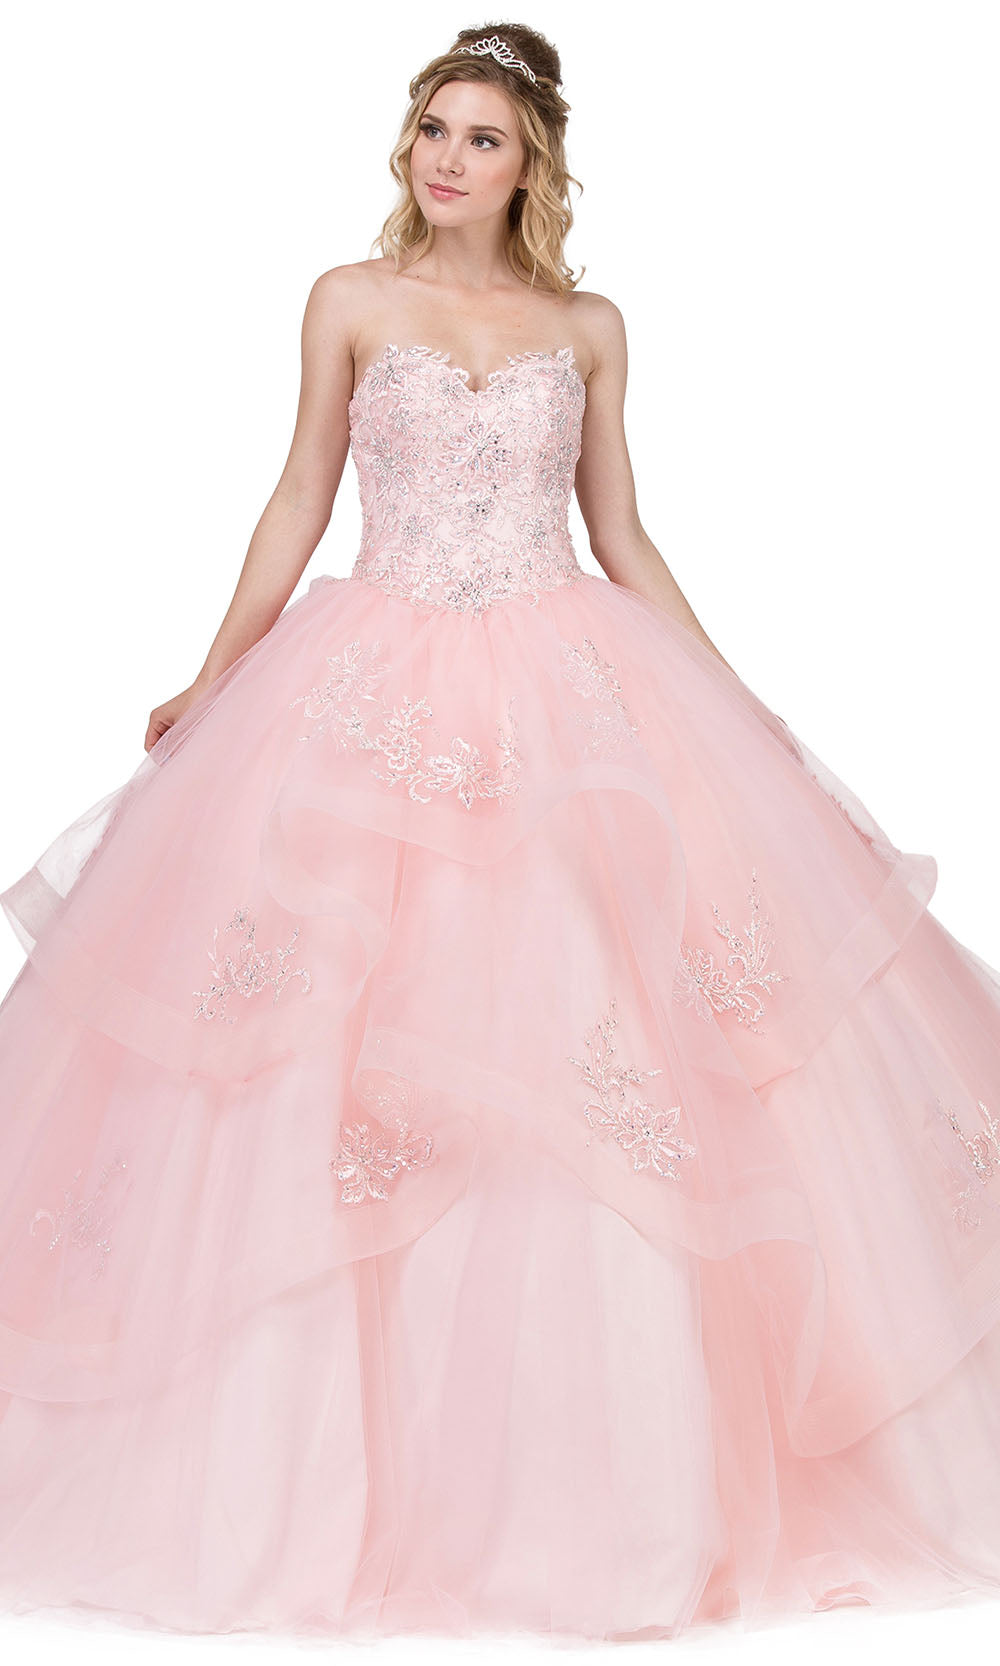 Dancing Queen - 1328 Sweetheart Embellished Ballgown In Pink